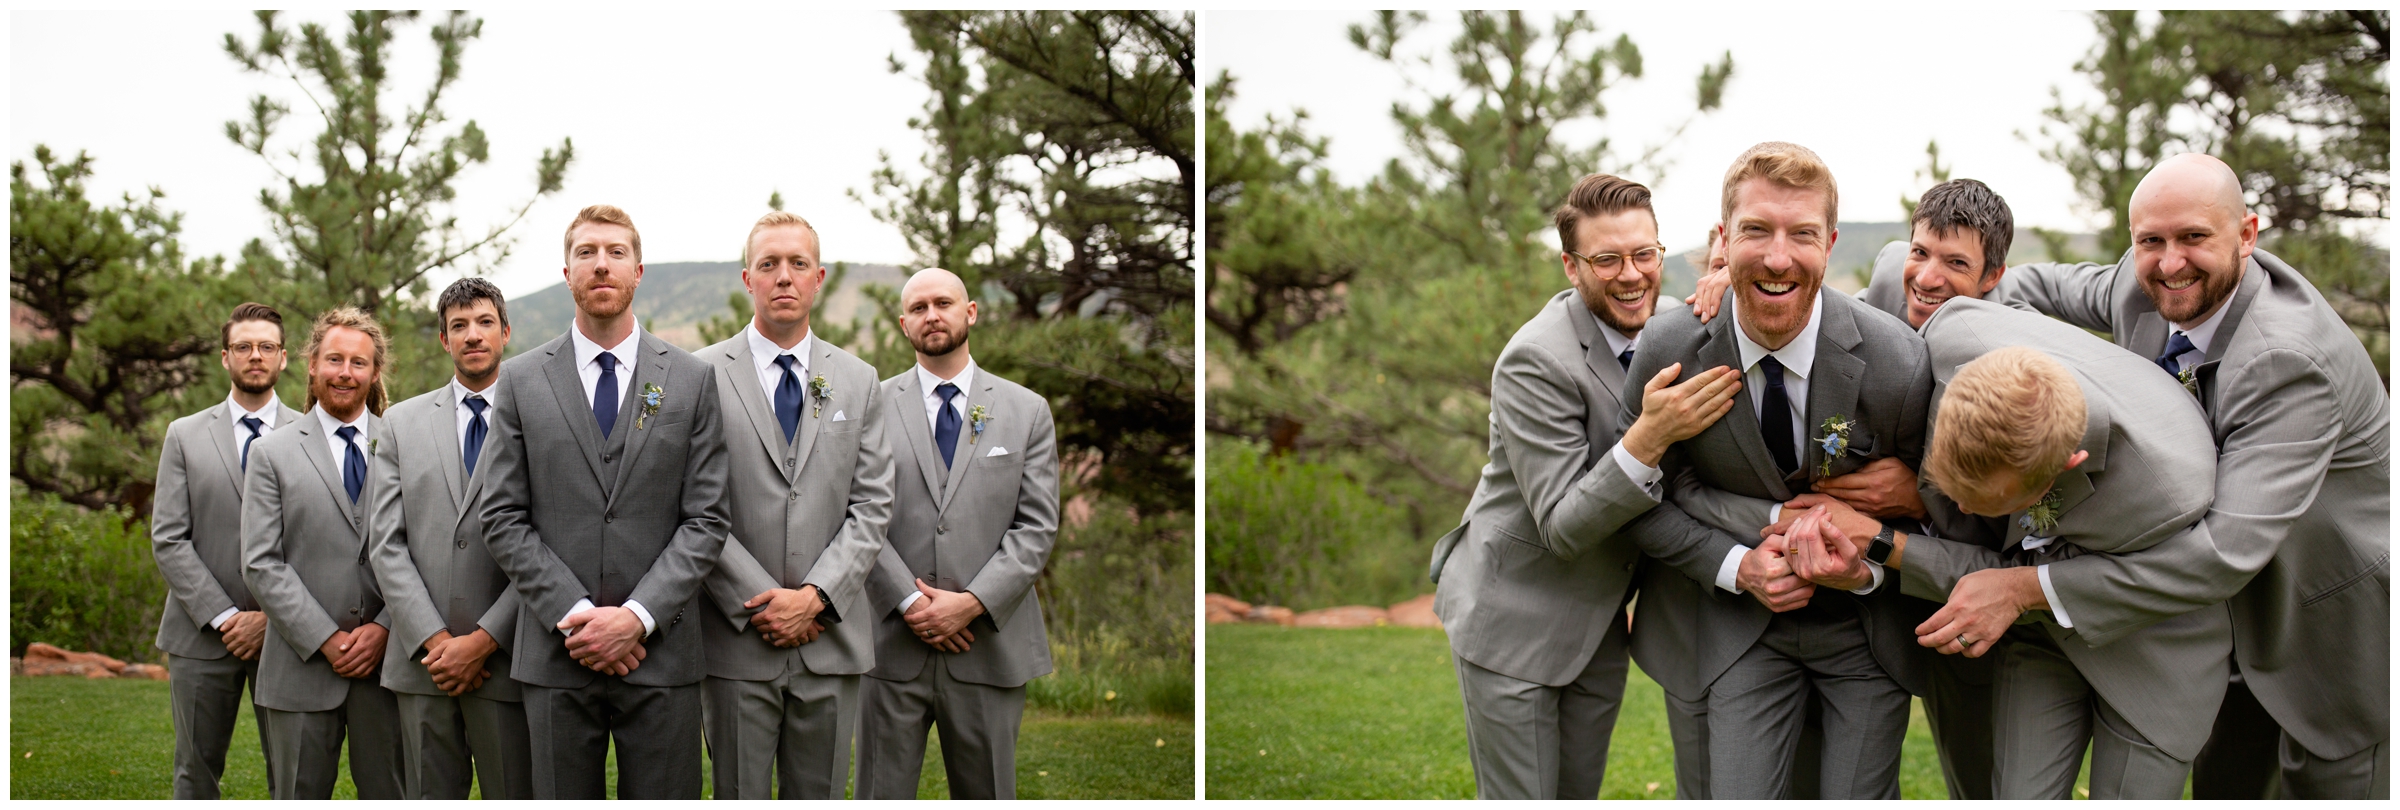 groomsmen bear hugging groom during fun wedding party photos in Colorado 